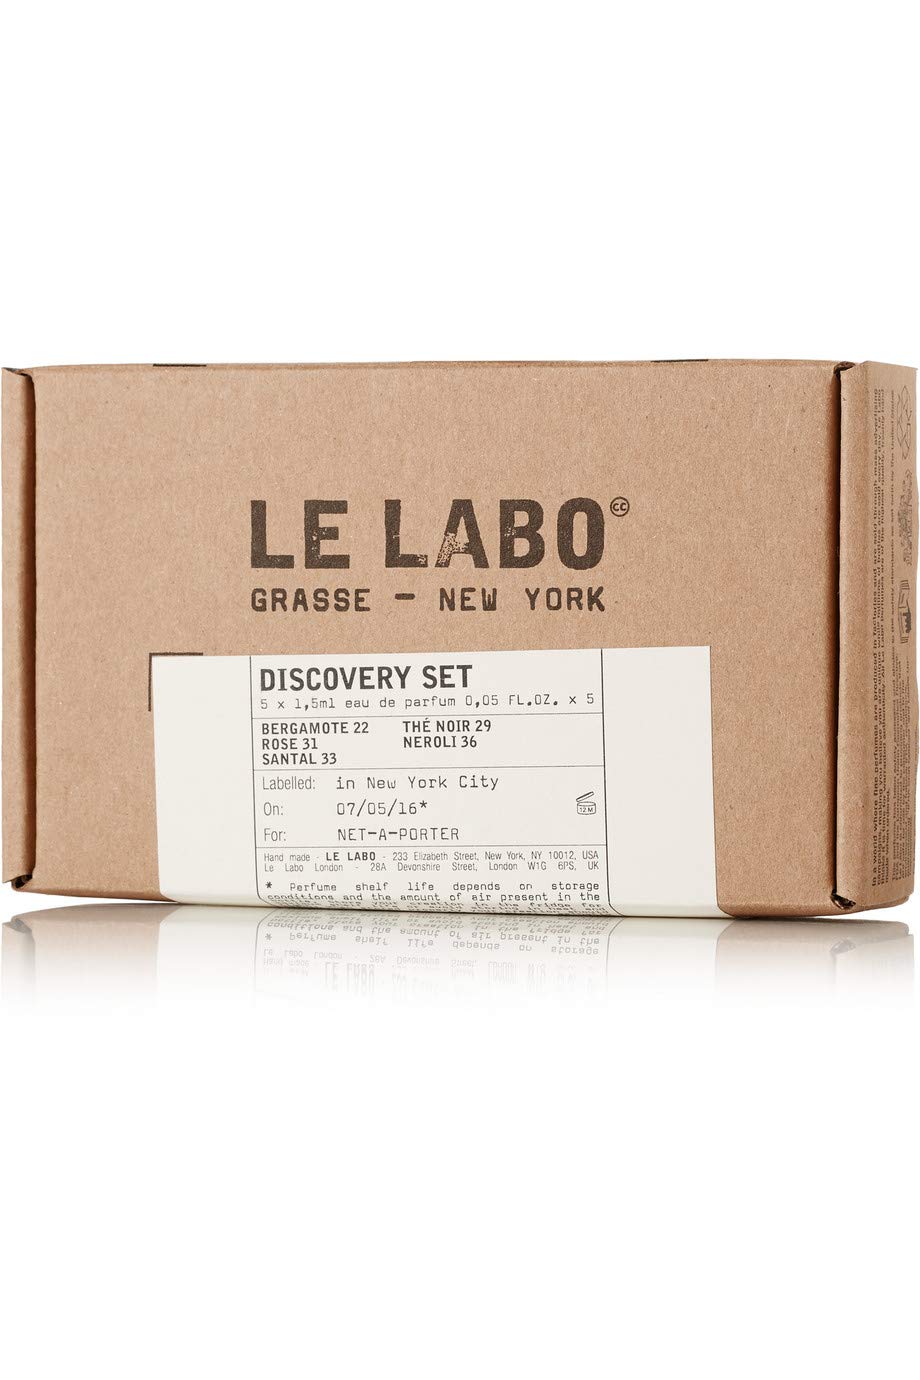 Le Labo Discovery Set Santal 33, Rose 31, Bergamote 22, Neroli 36 13 & The Noir 29 - .05 oz. Each